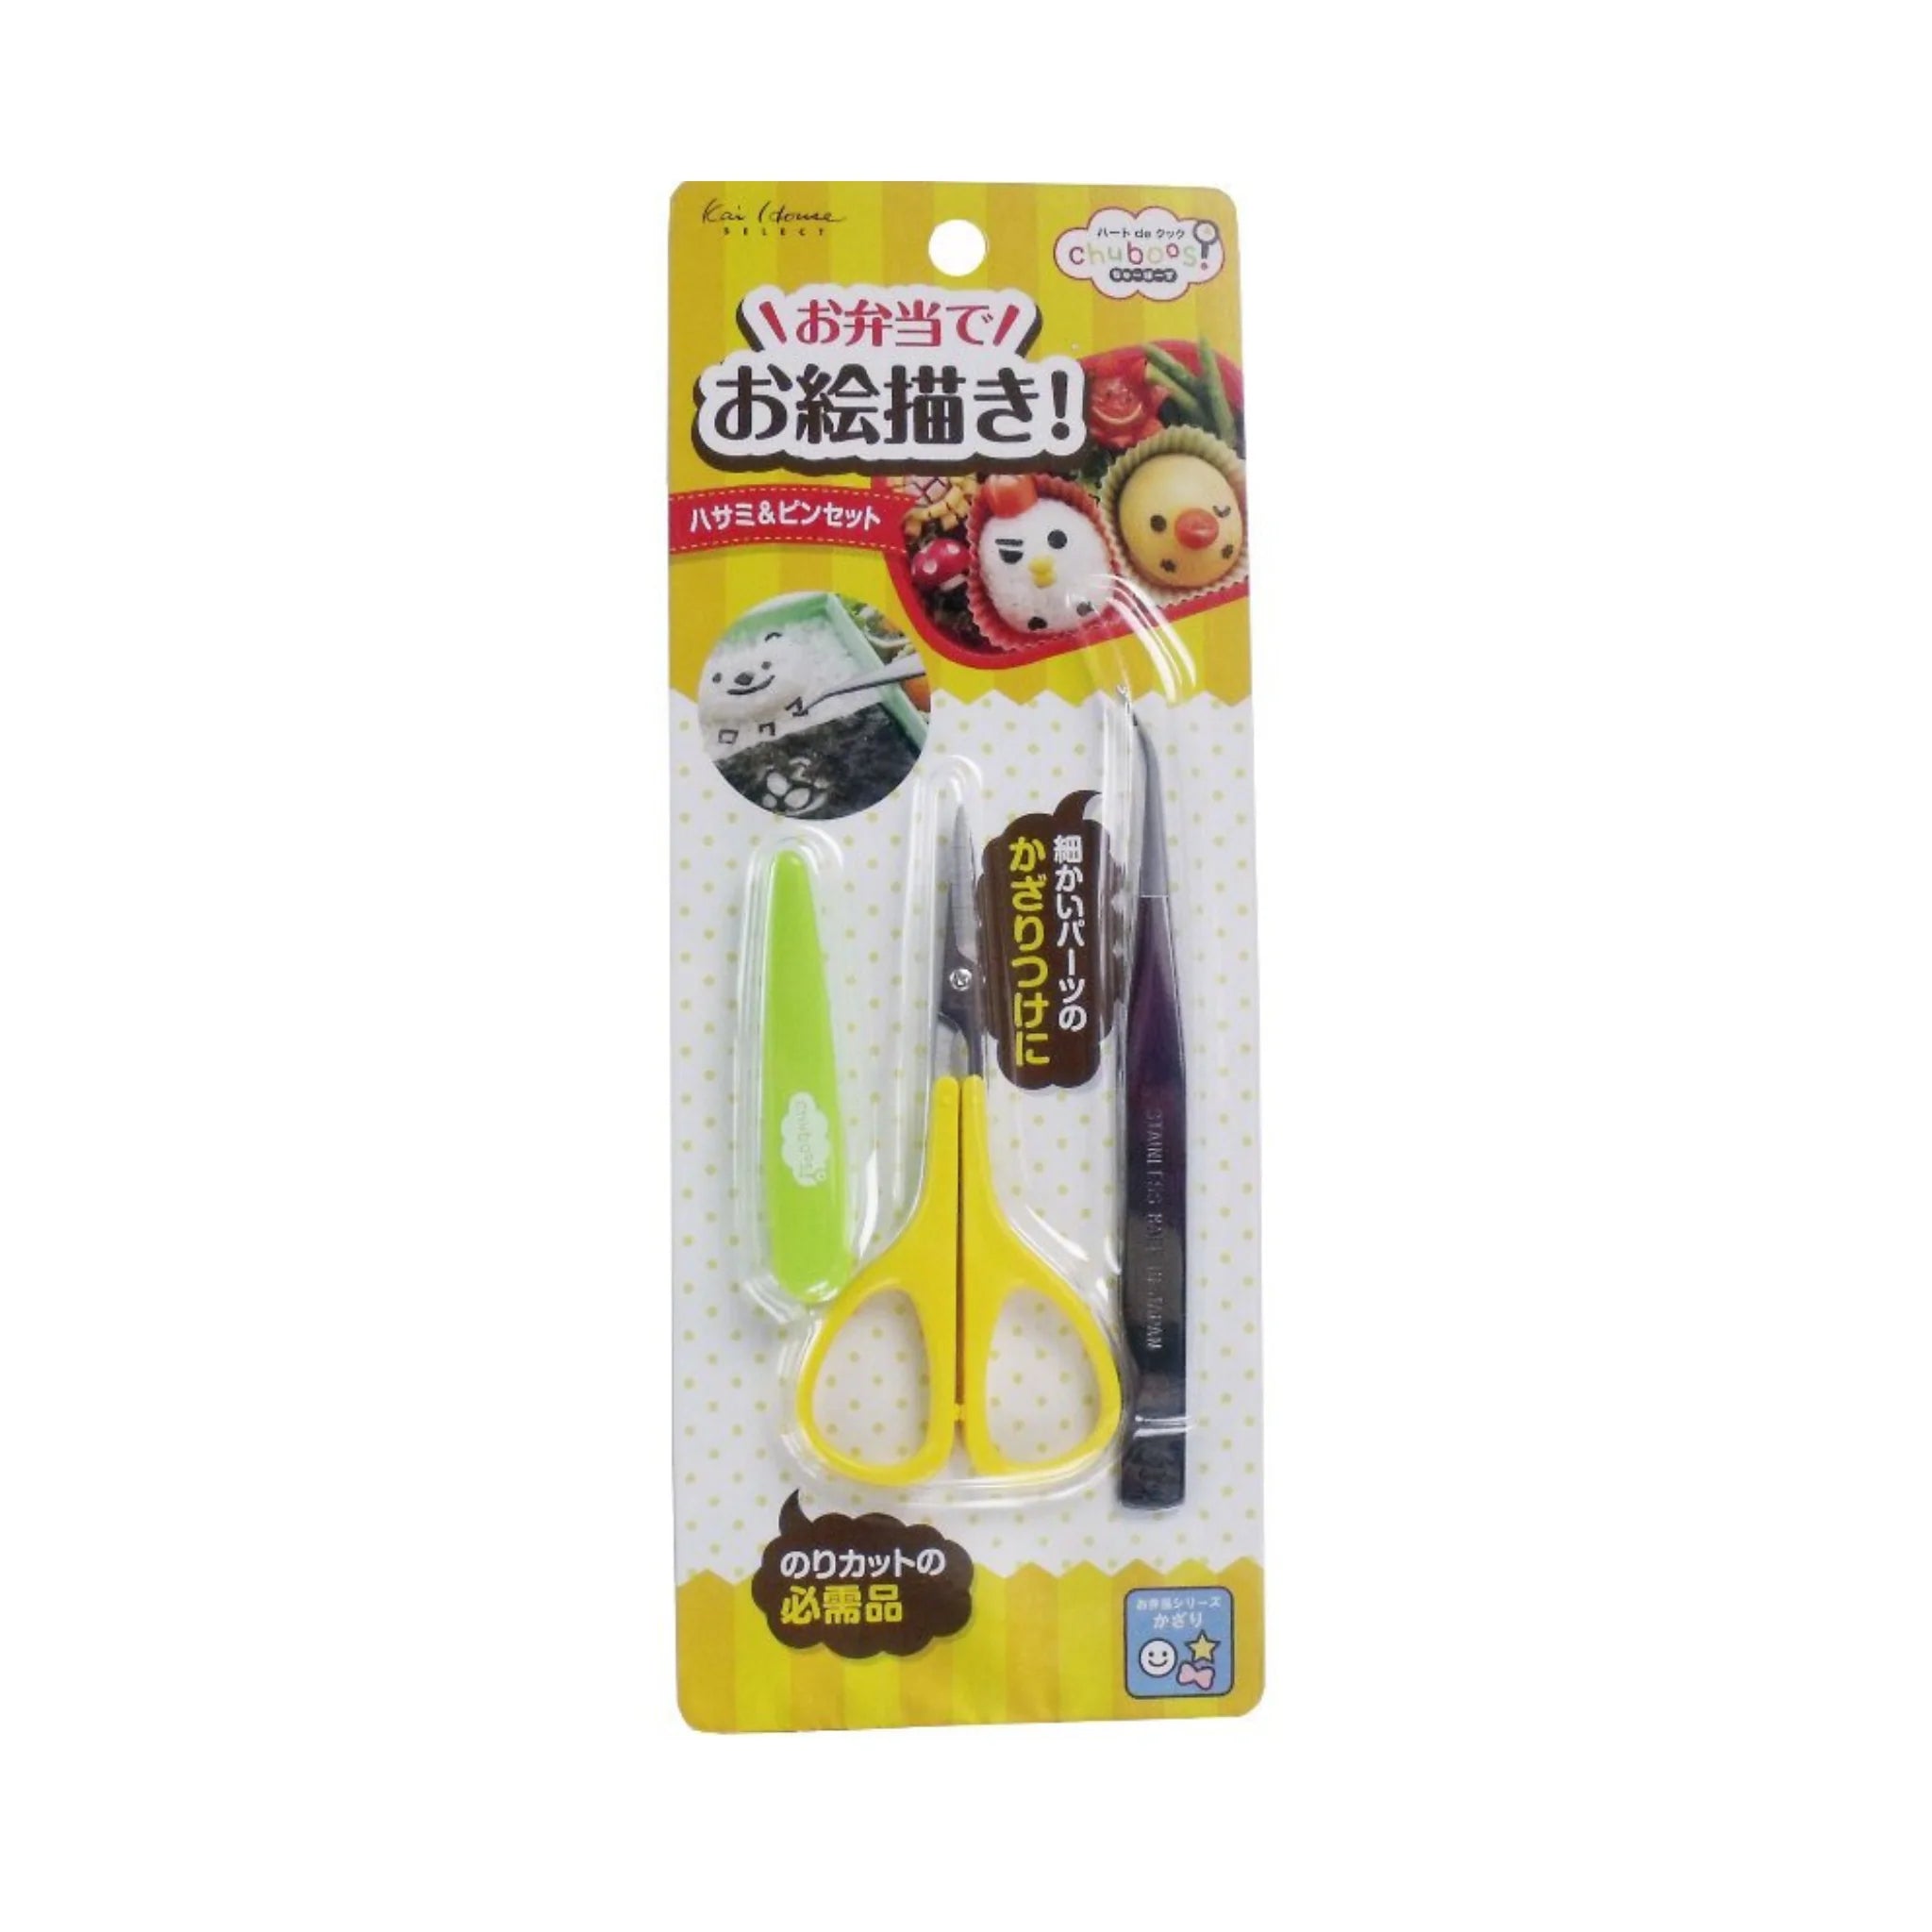 Bento Food Art Scissor and Accessories Set